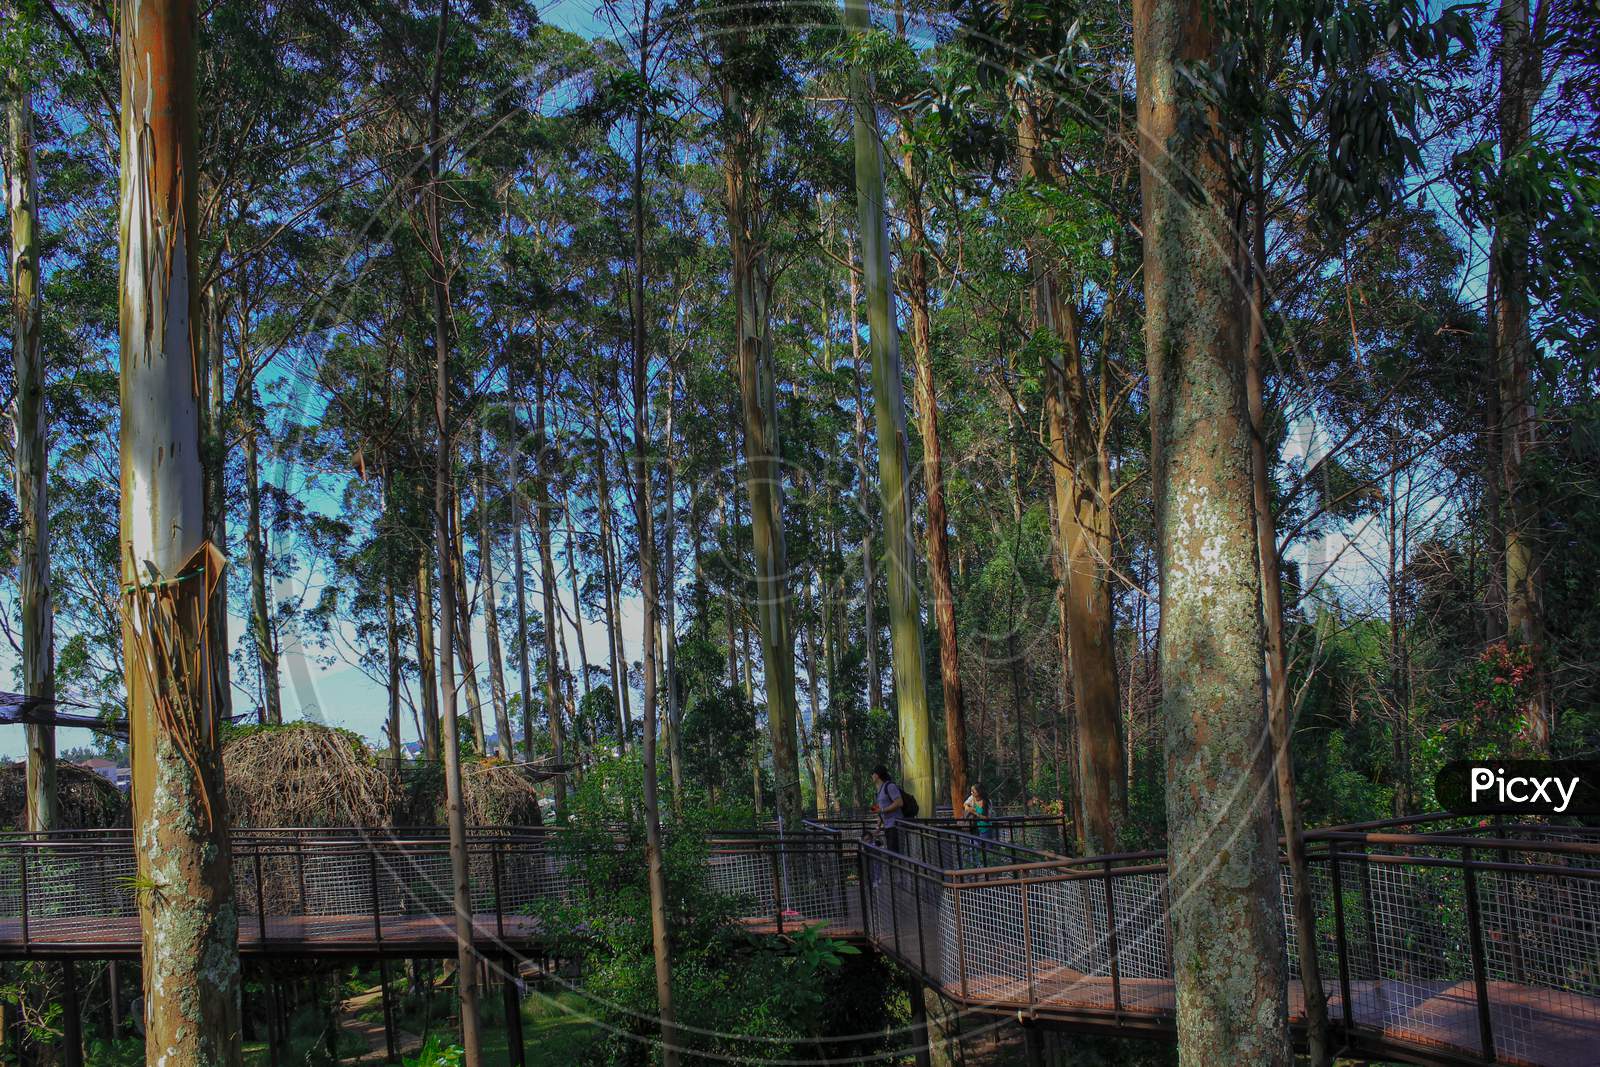 Trees in the park, Dusun Bambu, Bandung, West Java, Indonesia